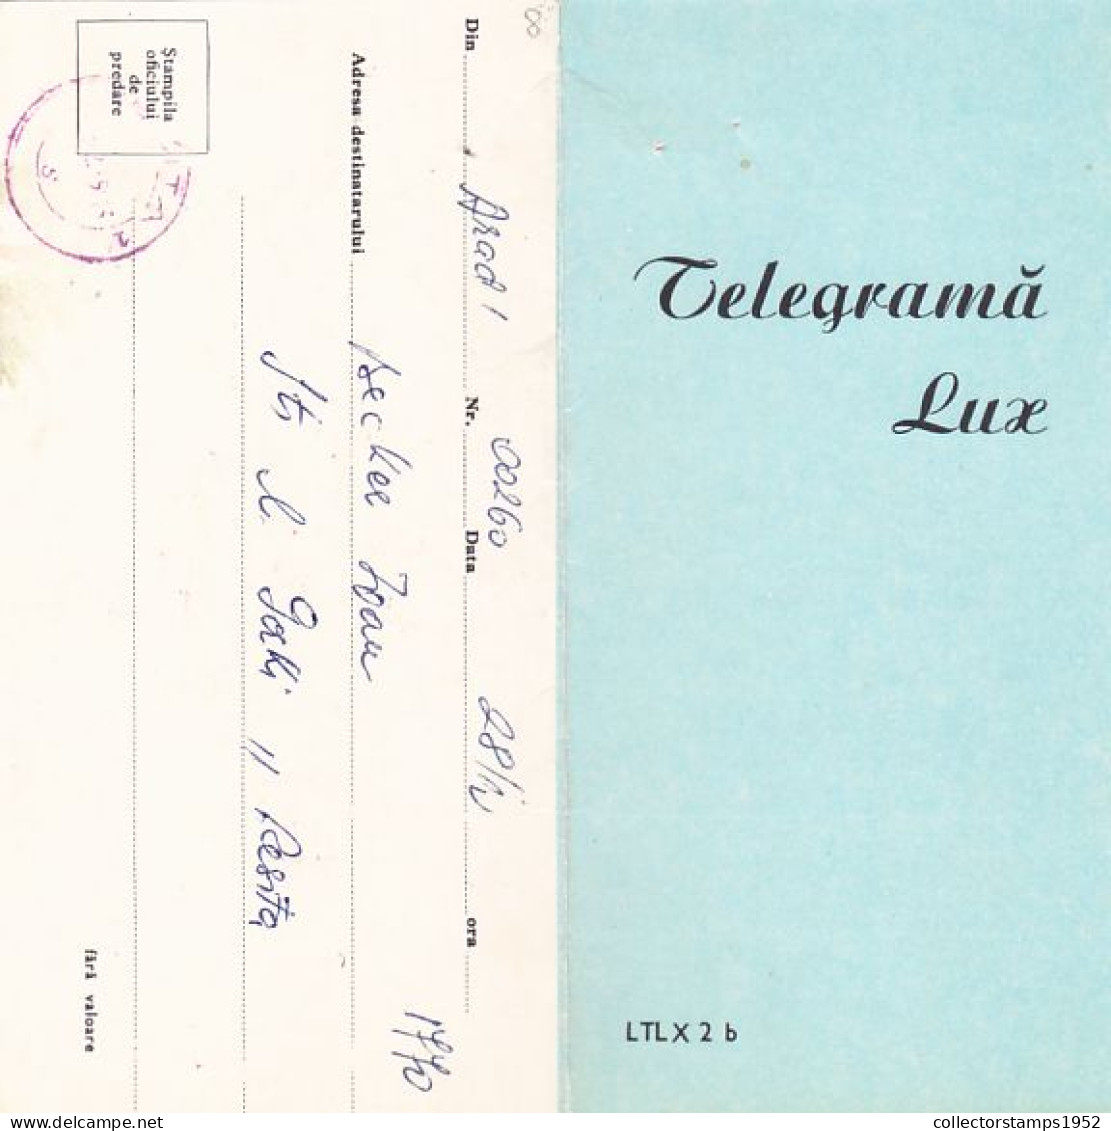 BOY IN FOLKLORE COSTUME, LUXURY TELEGRAM, TELEGRAPH, 1975, ROMANIA - Telegraph